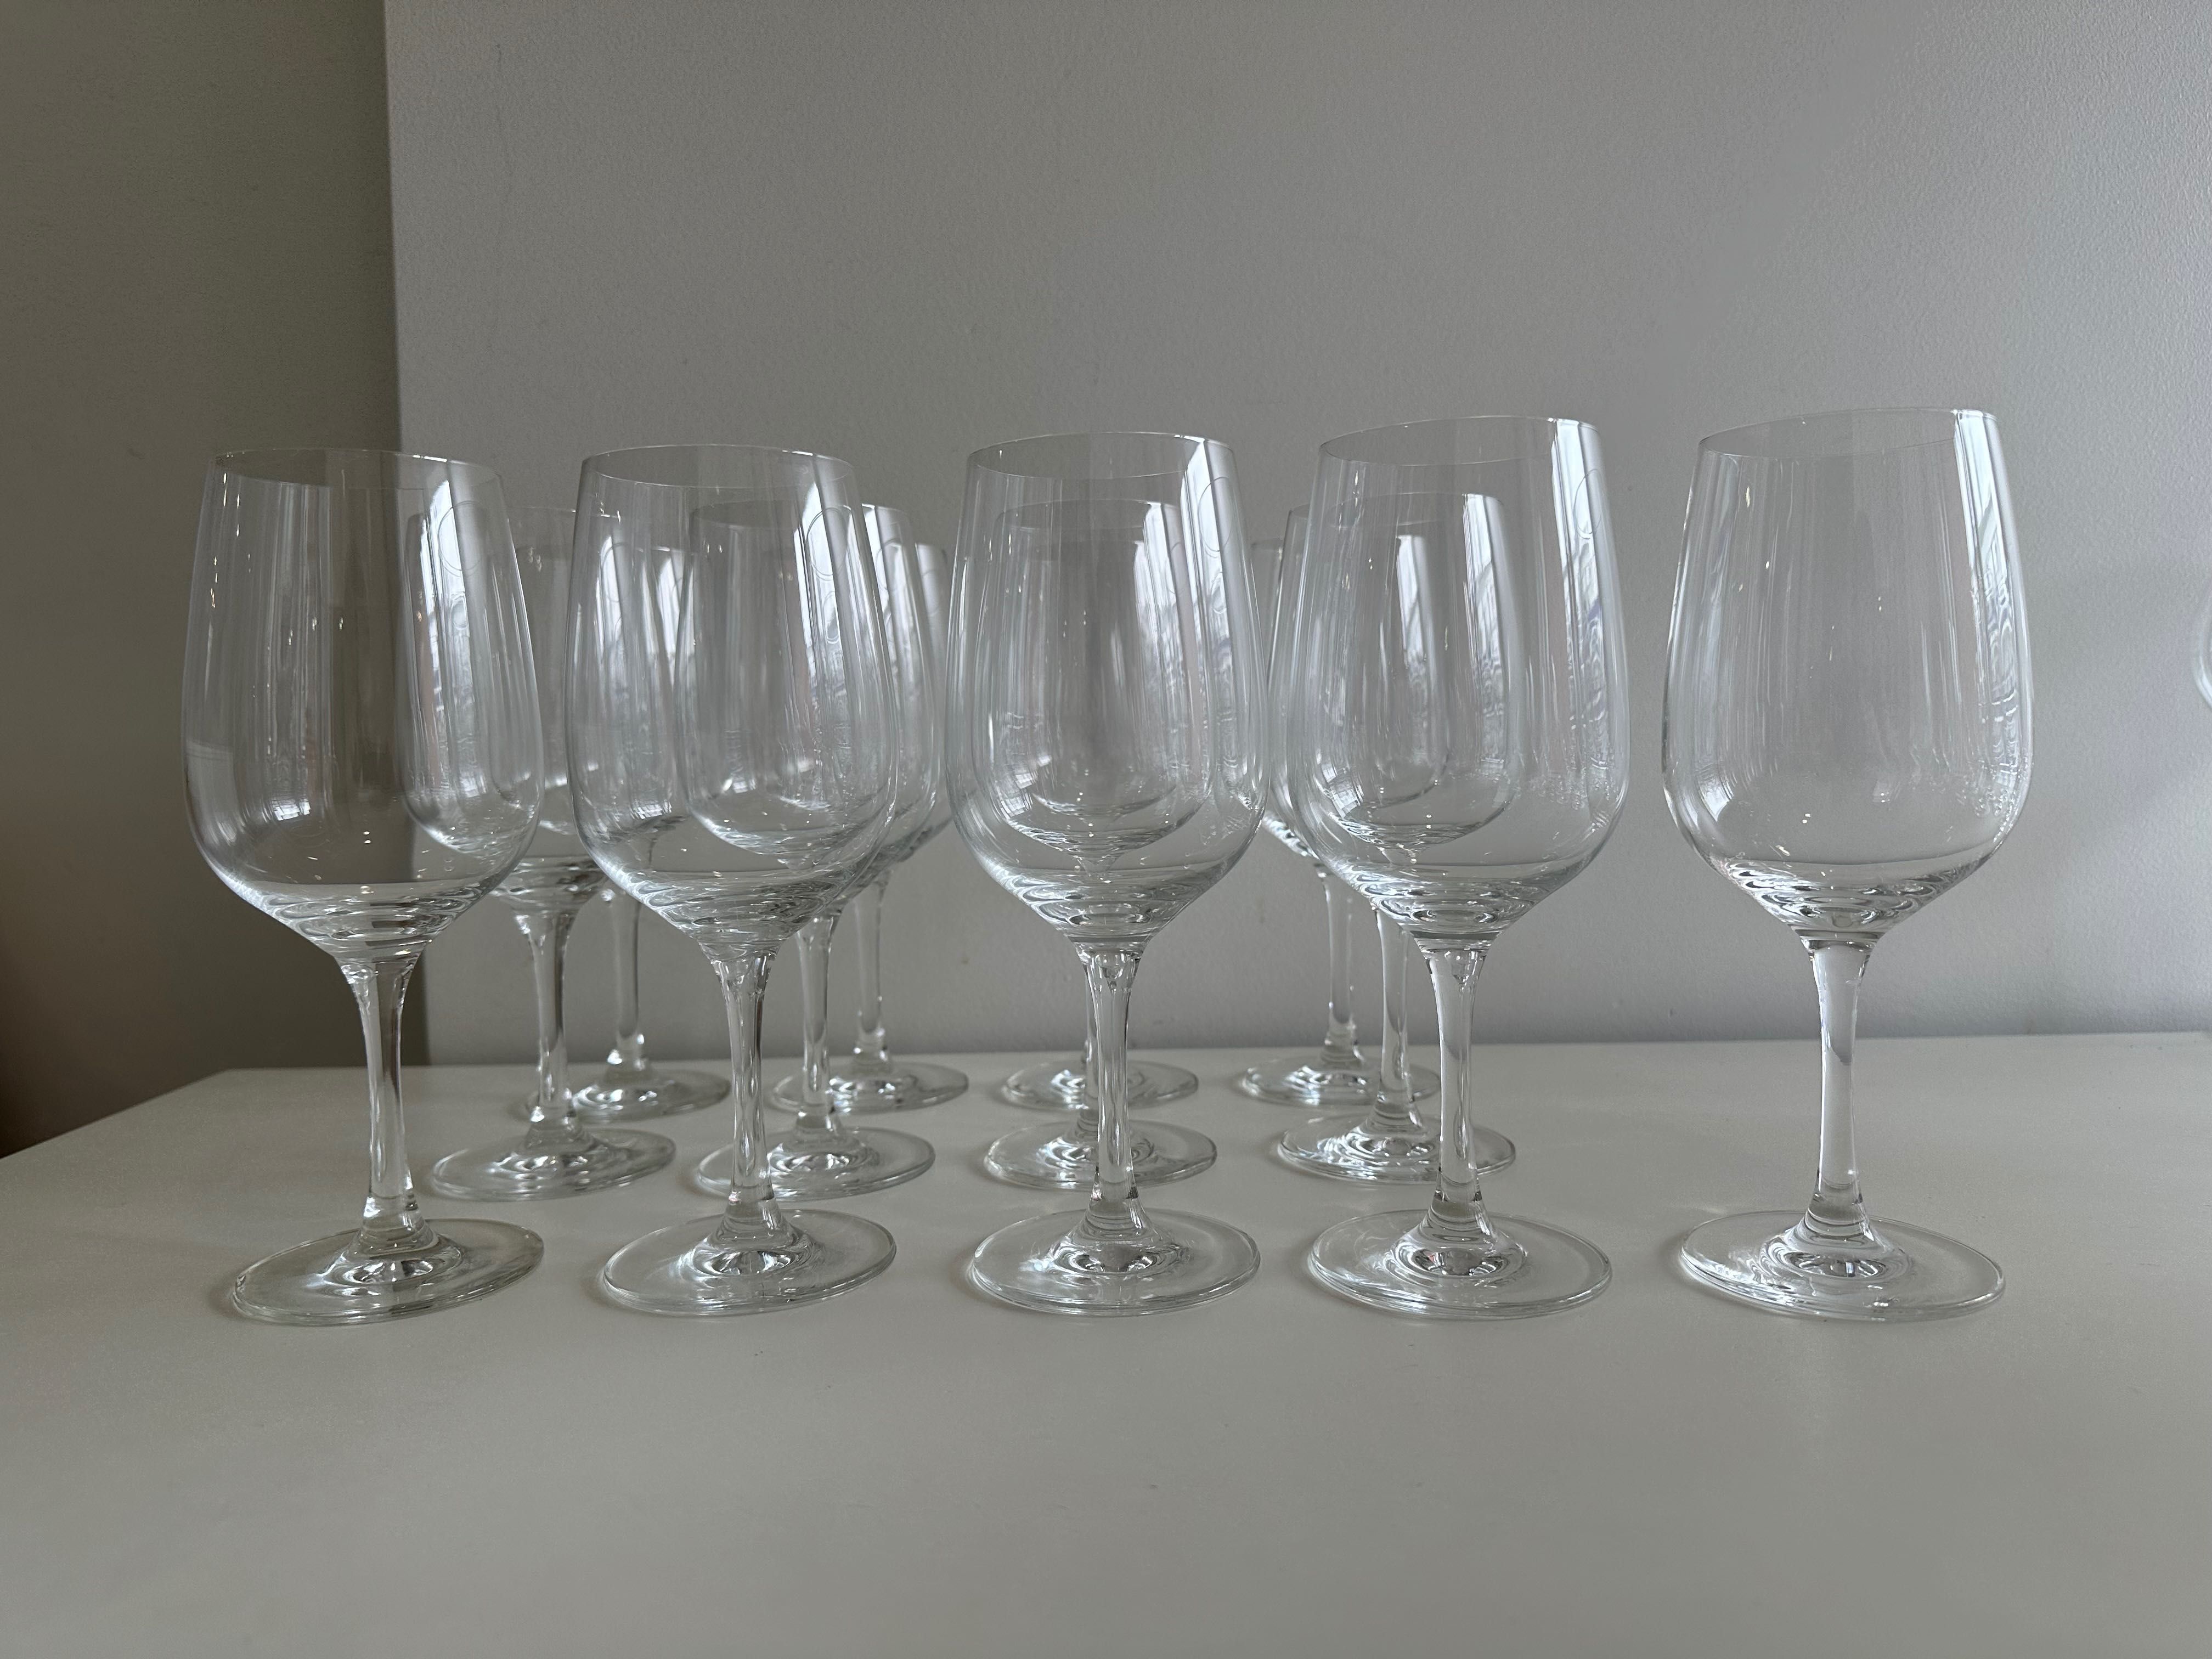 Schott Zwiesel - 13 copos  vinho branco - Chardonnay